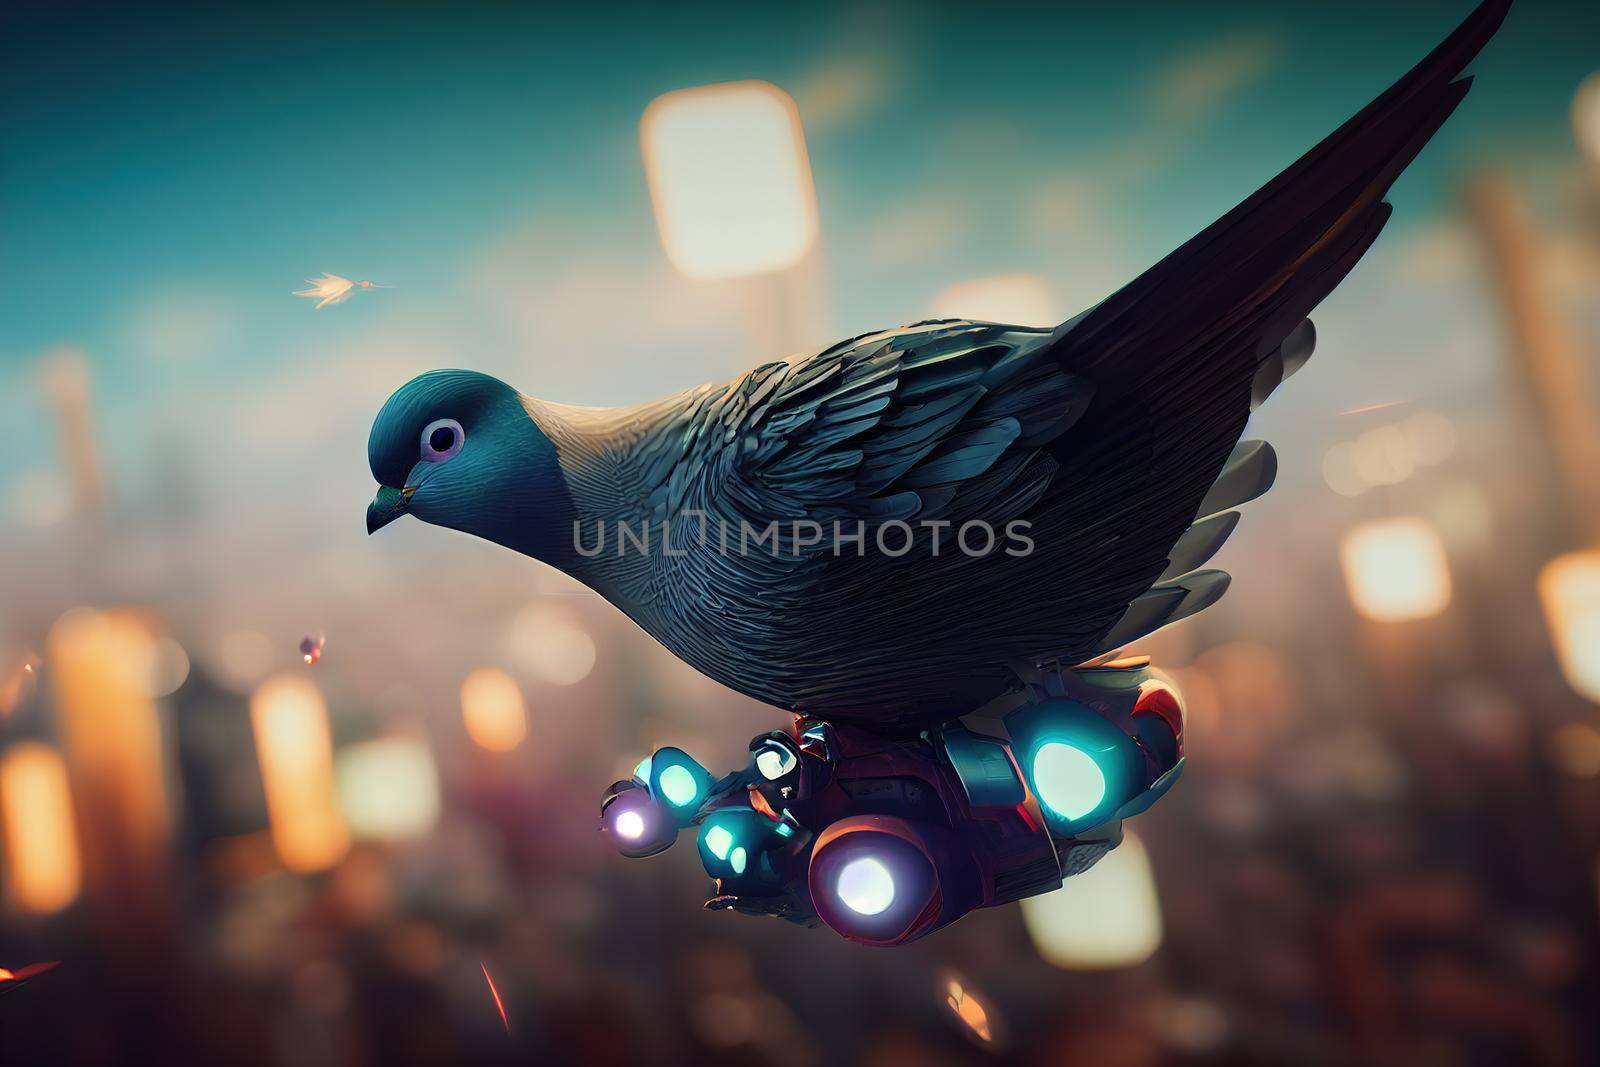 flying futuristic pigeon cartoon style. High quality 3d illustration